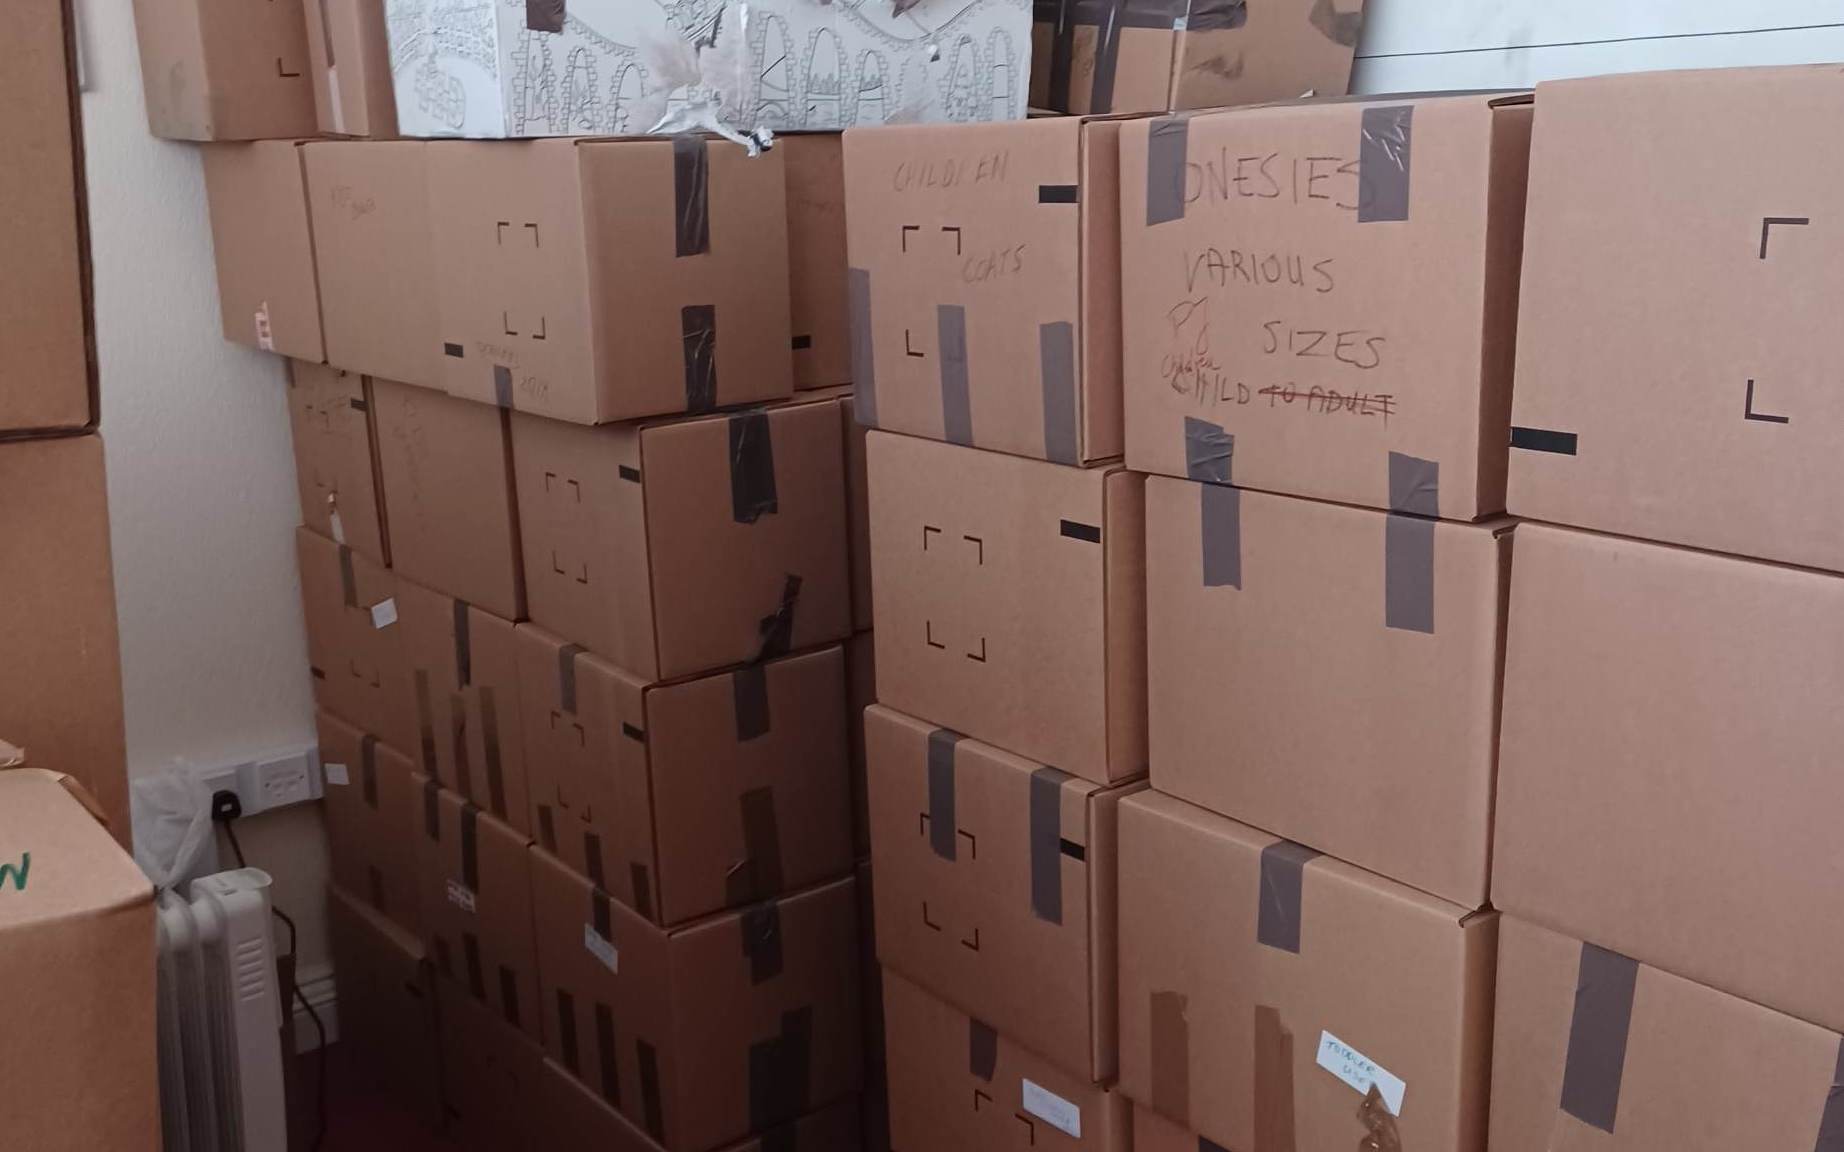 LOADED: Clacks Ukraine Support has sent hundreds of boxes to help people in war-torn Kharkiv